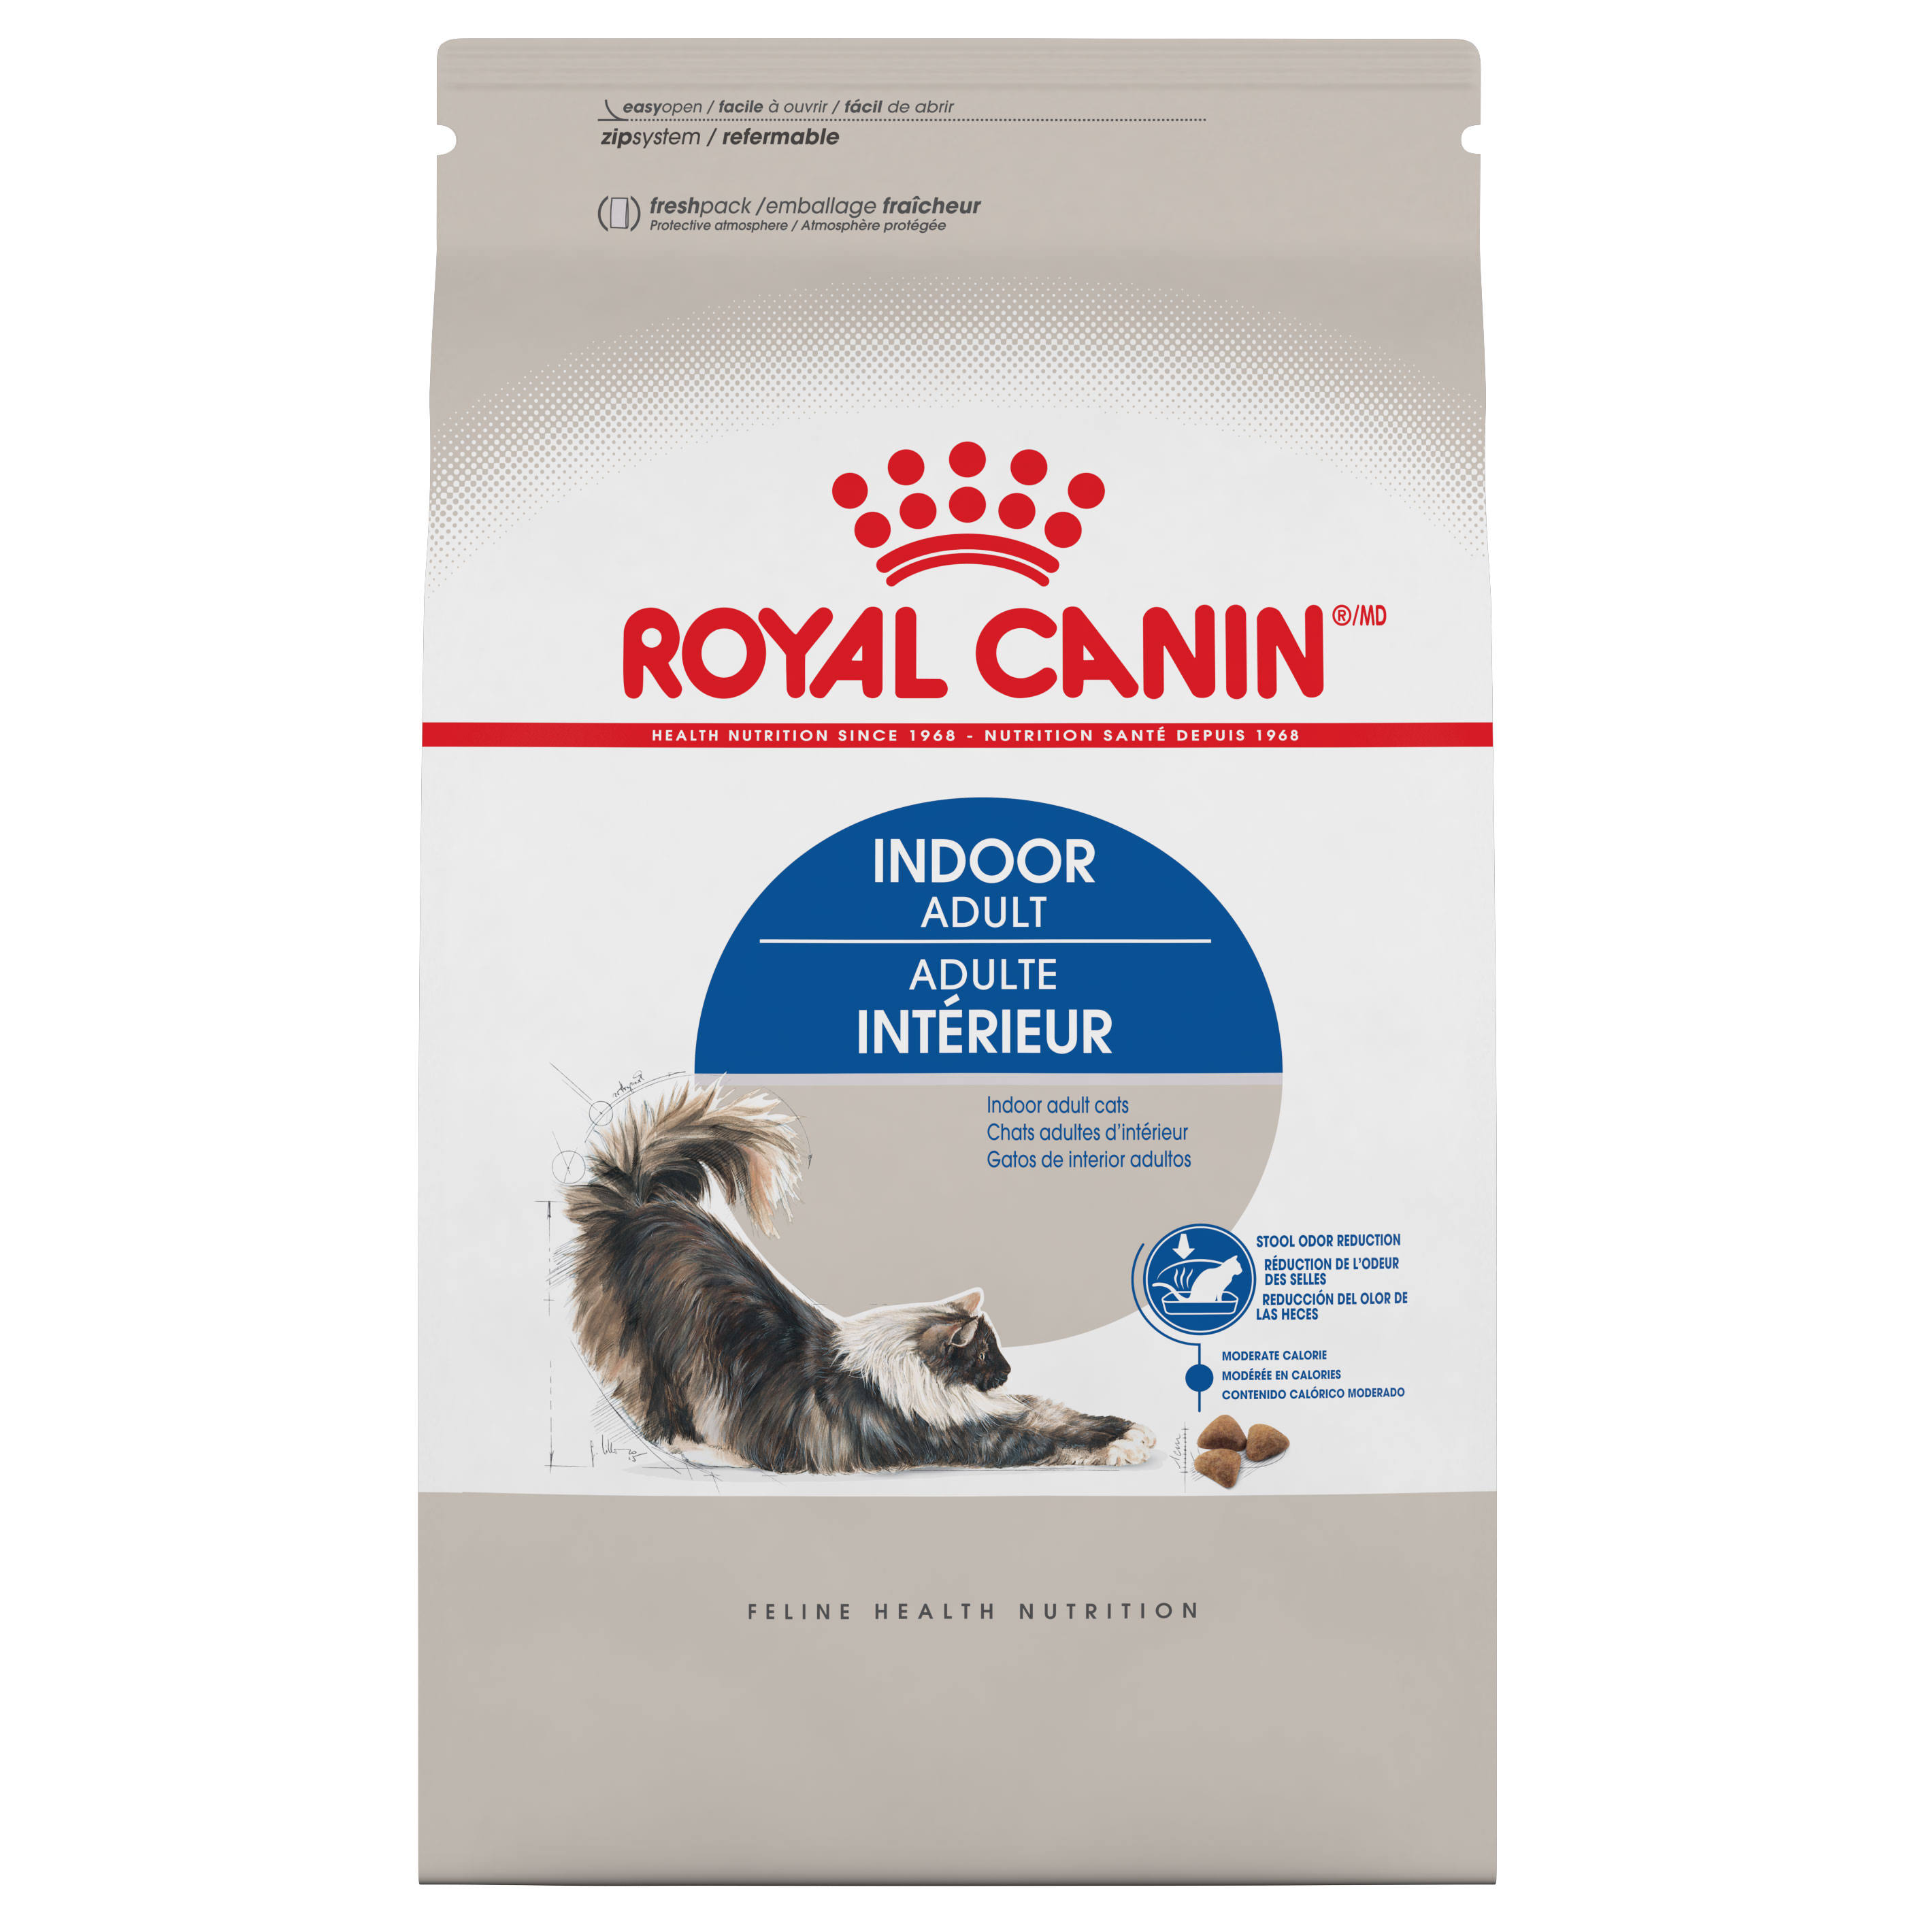 Royal Canin Indoor Adult Cat Food